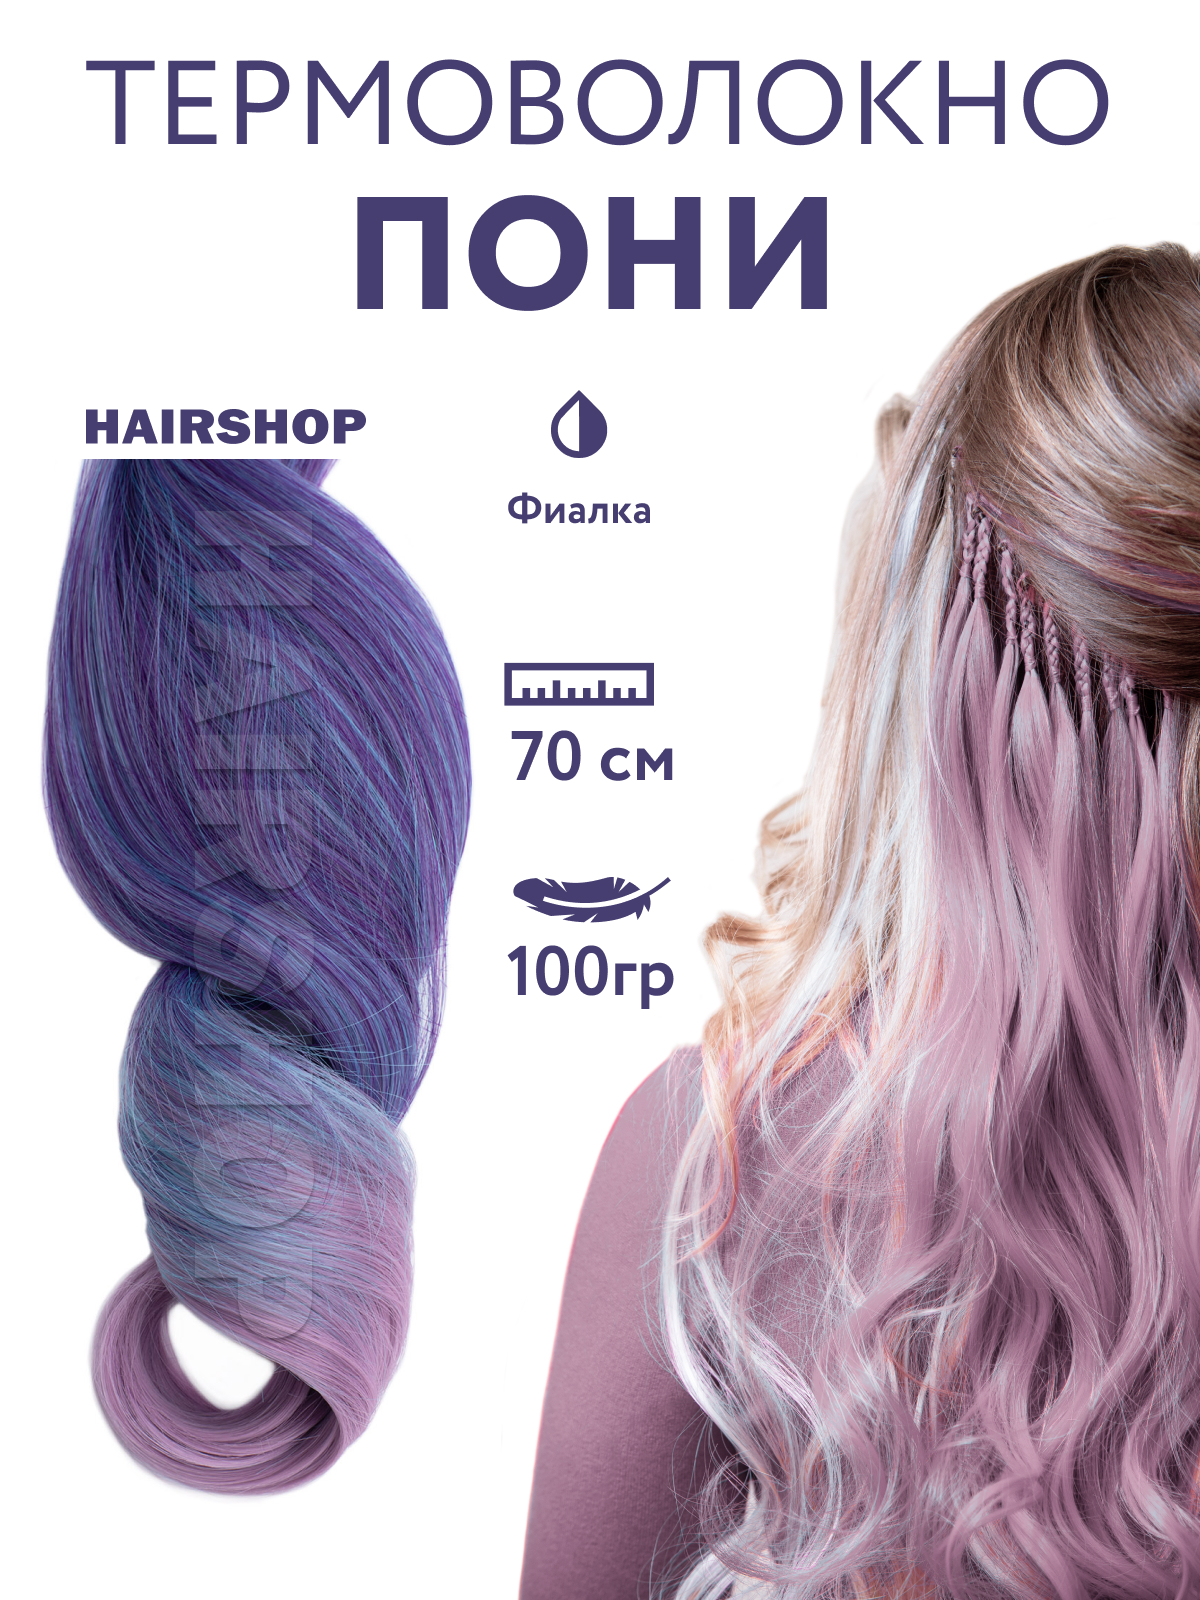 Канекалон Hairshop Пони HairUp для точечного афронаращивания Фиалка 1,4м канекалон hairshop пони hairup для точечного афронаращивания средне русый 1 4м